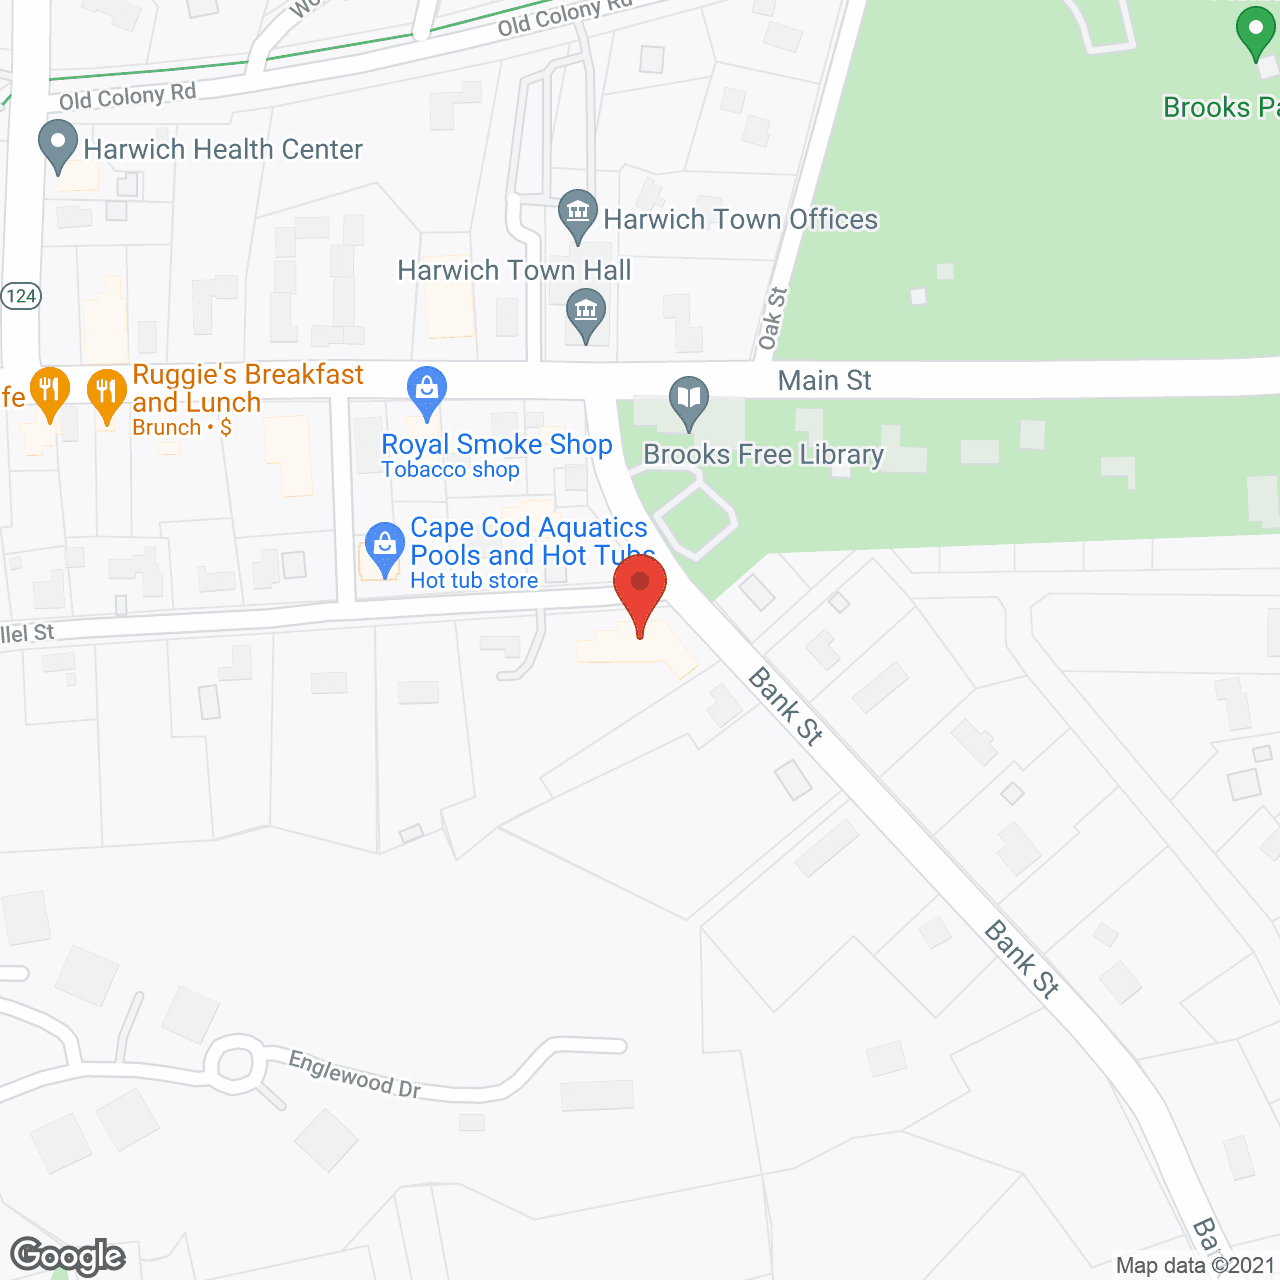 Royal at Harwich Village in google map